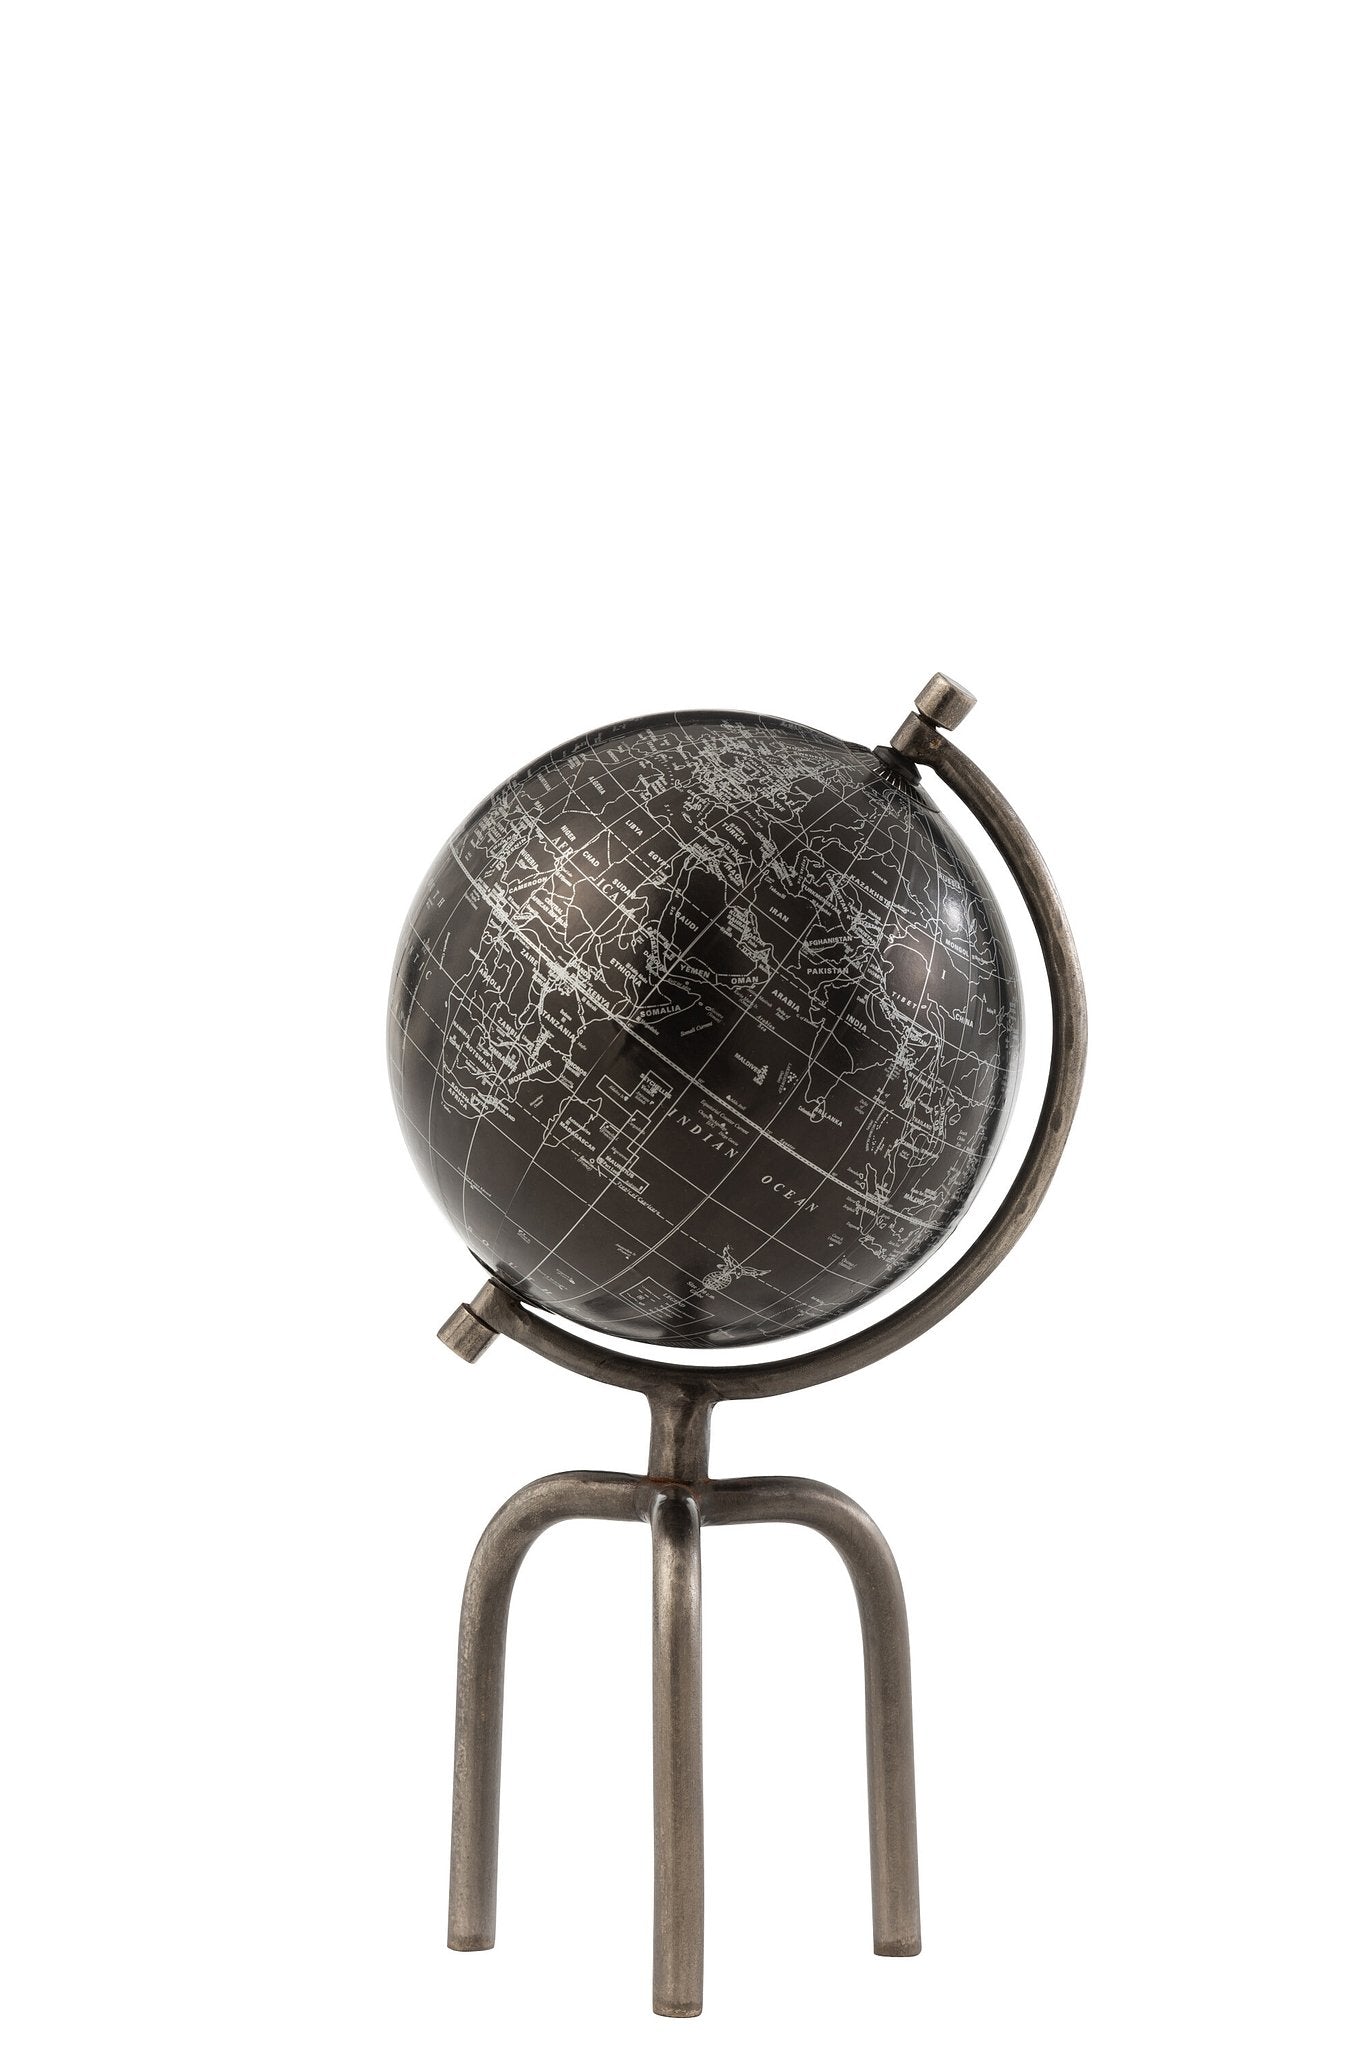 J-Line wereldbol Tripod - ijzer/kunststof - zilver/zwart - small